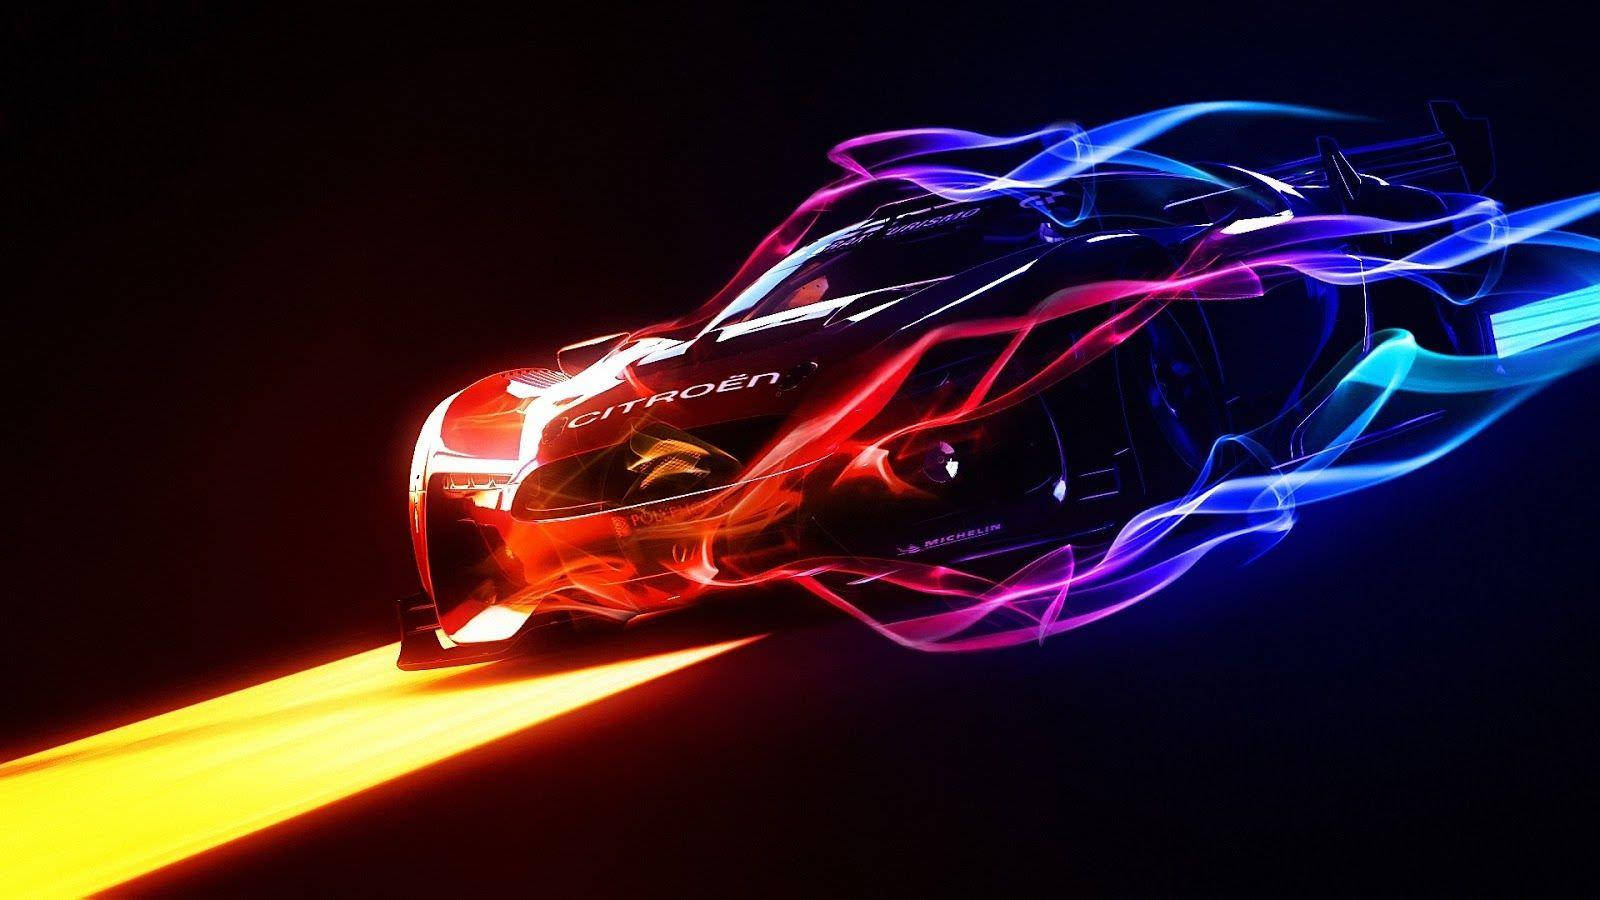 Futuristic Neon Fire Car On A Dynamic Desktop